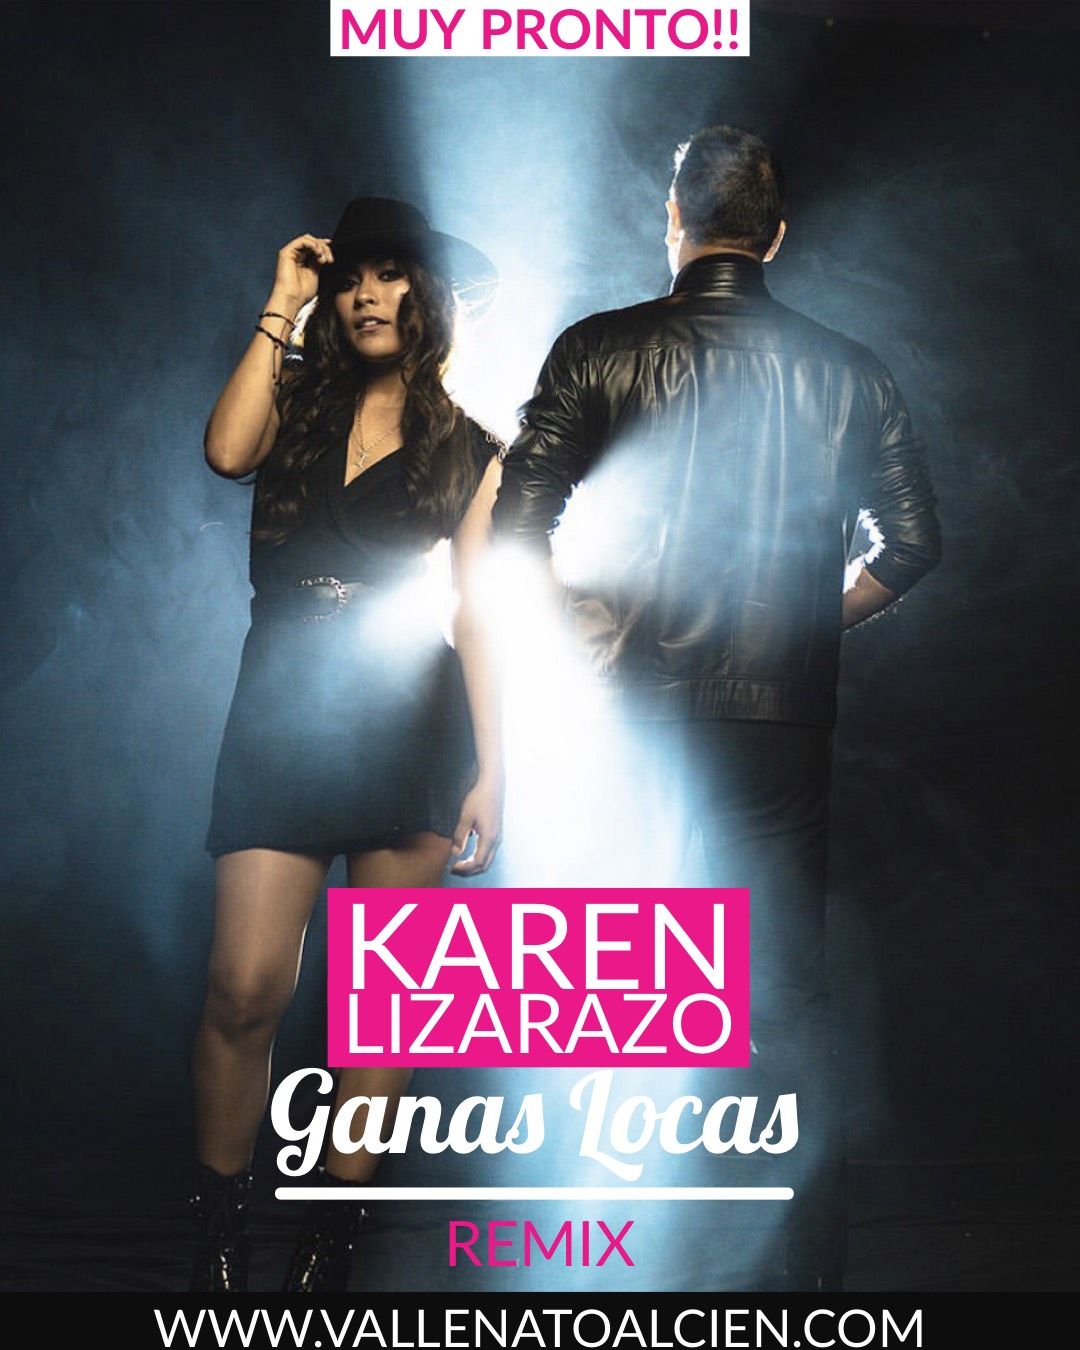 Karen Lizarazo Ganas Locas Remix